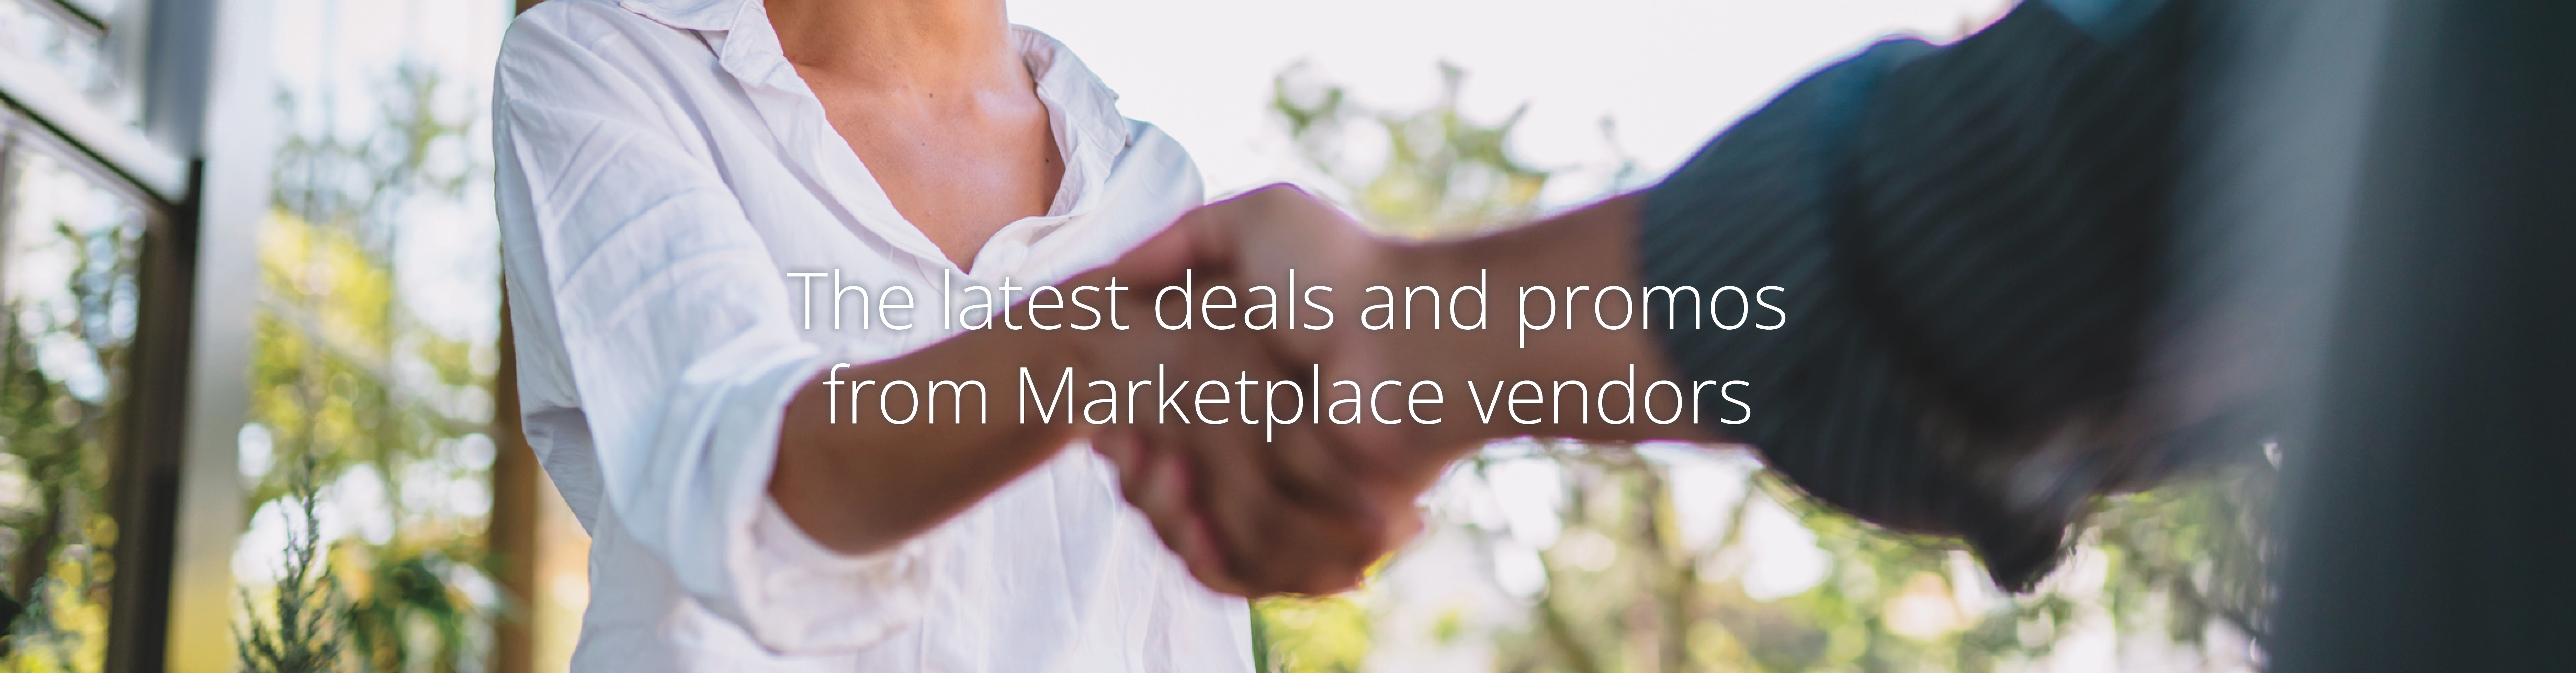 Marketplace Deals